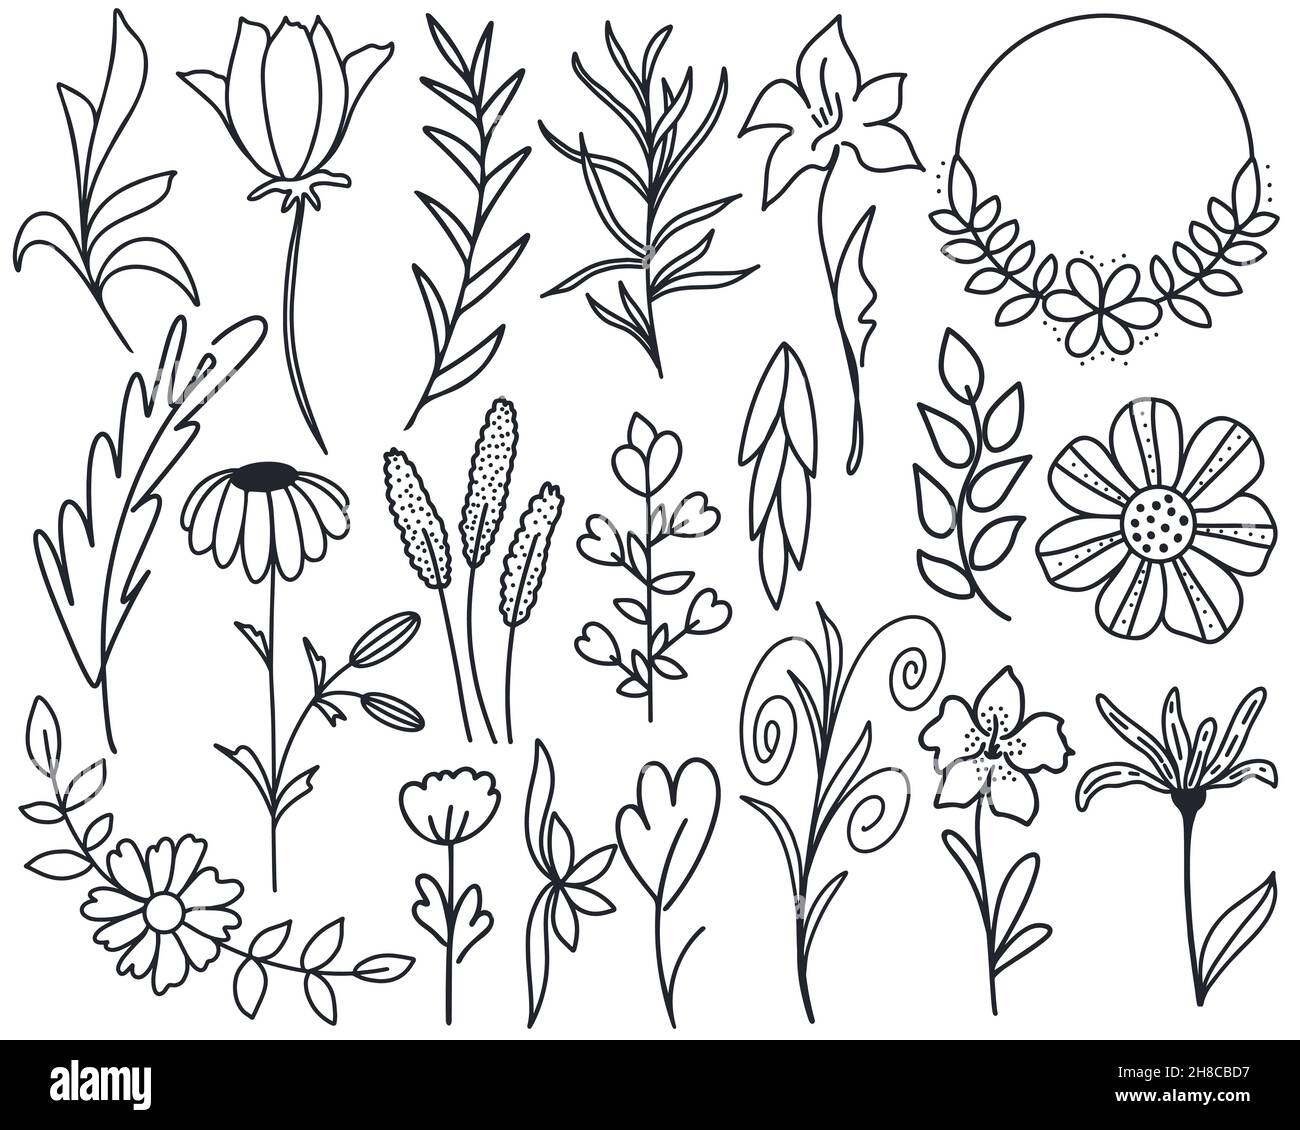 Flower doodle set vector illustration Stock Vector